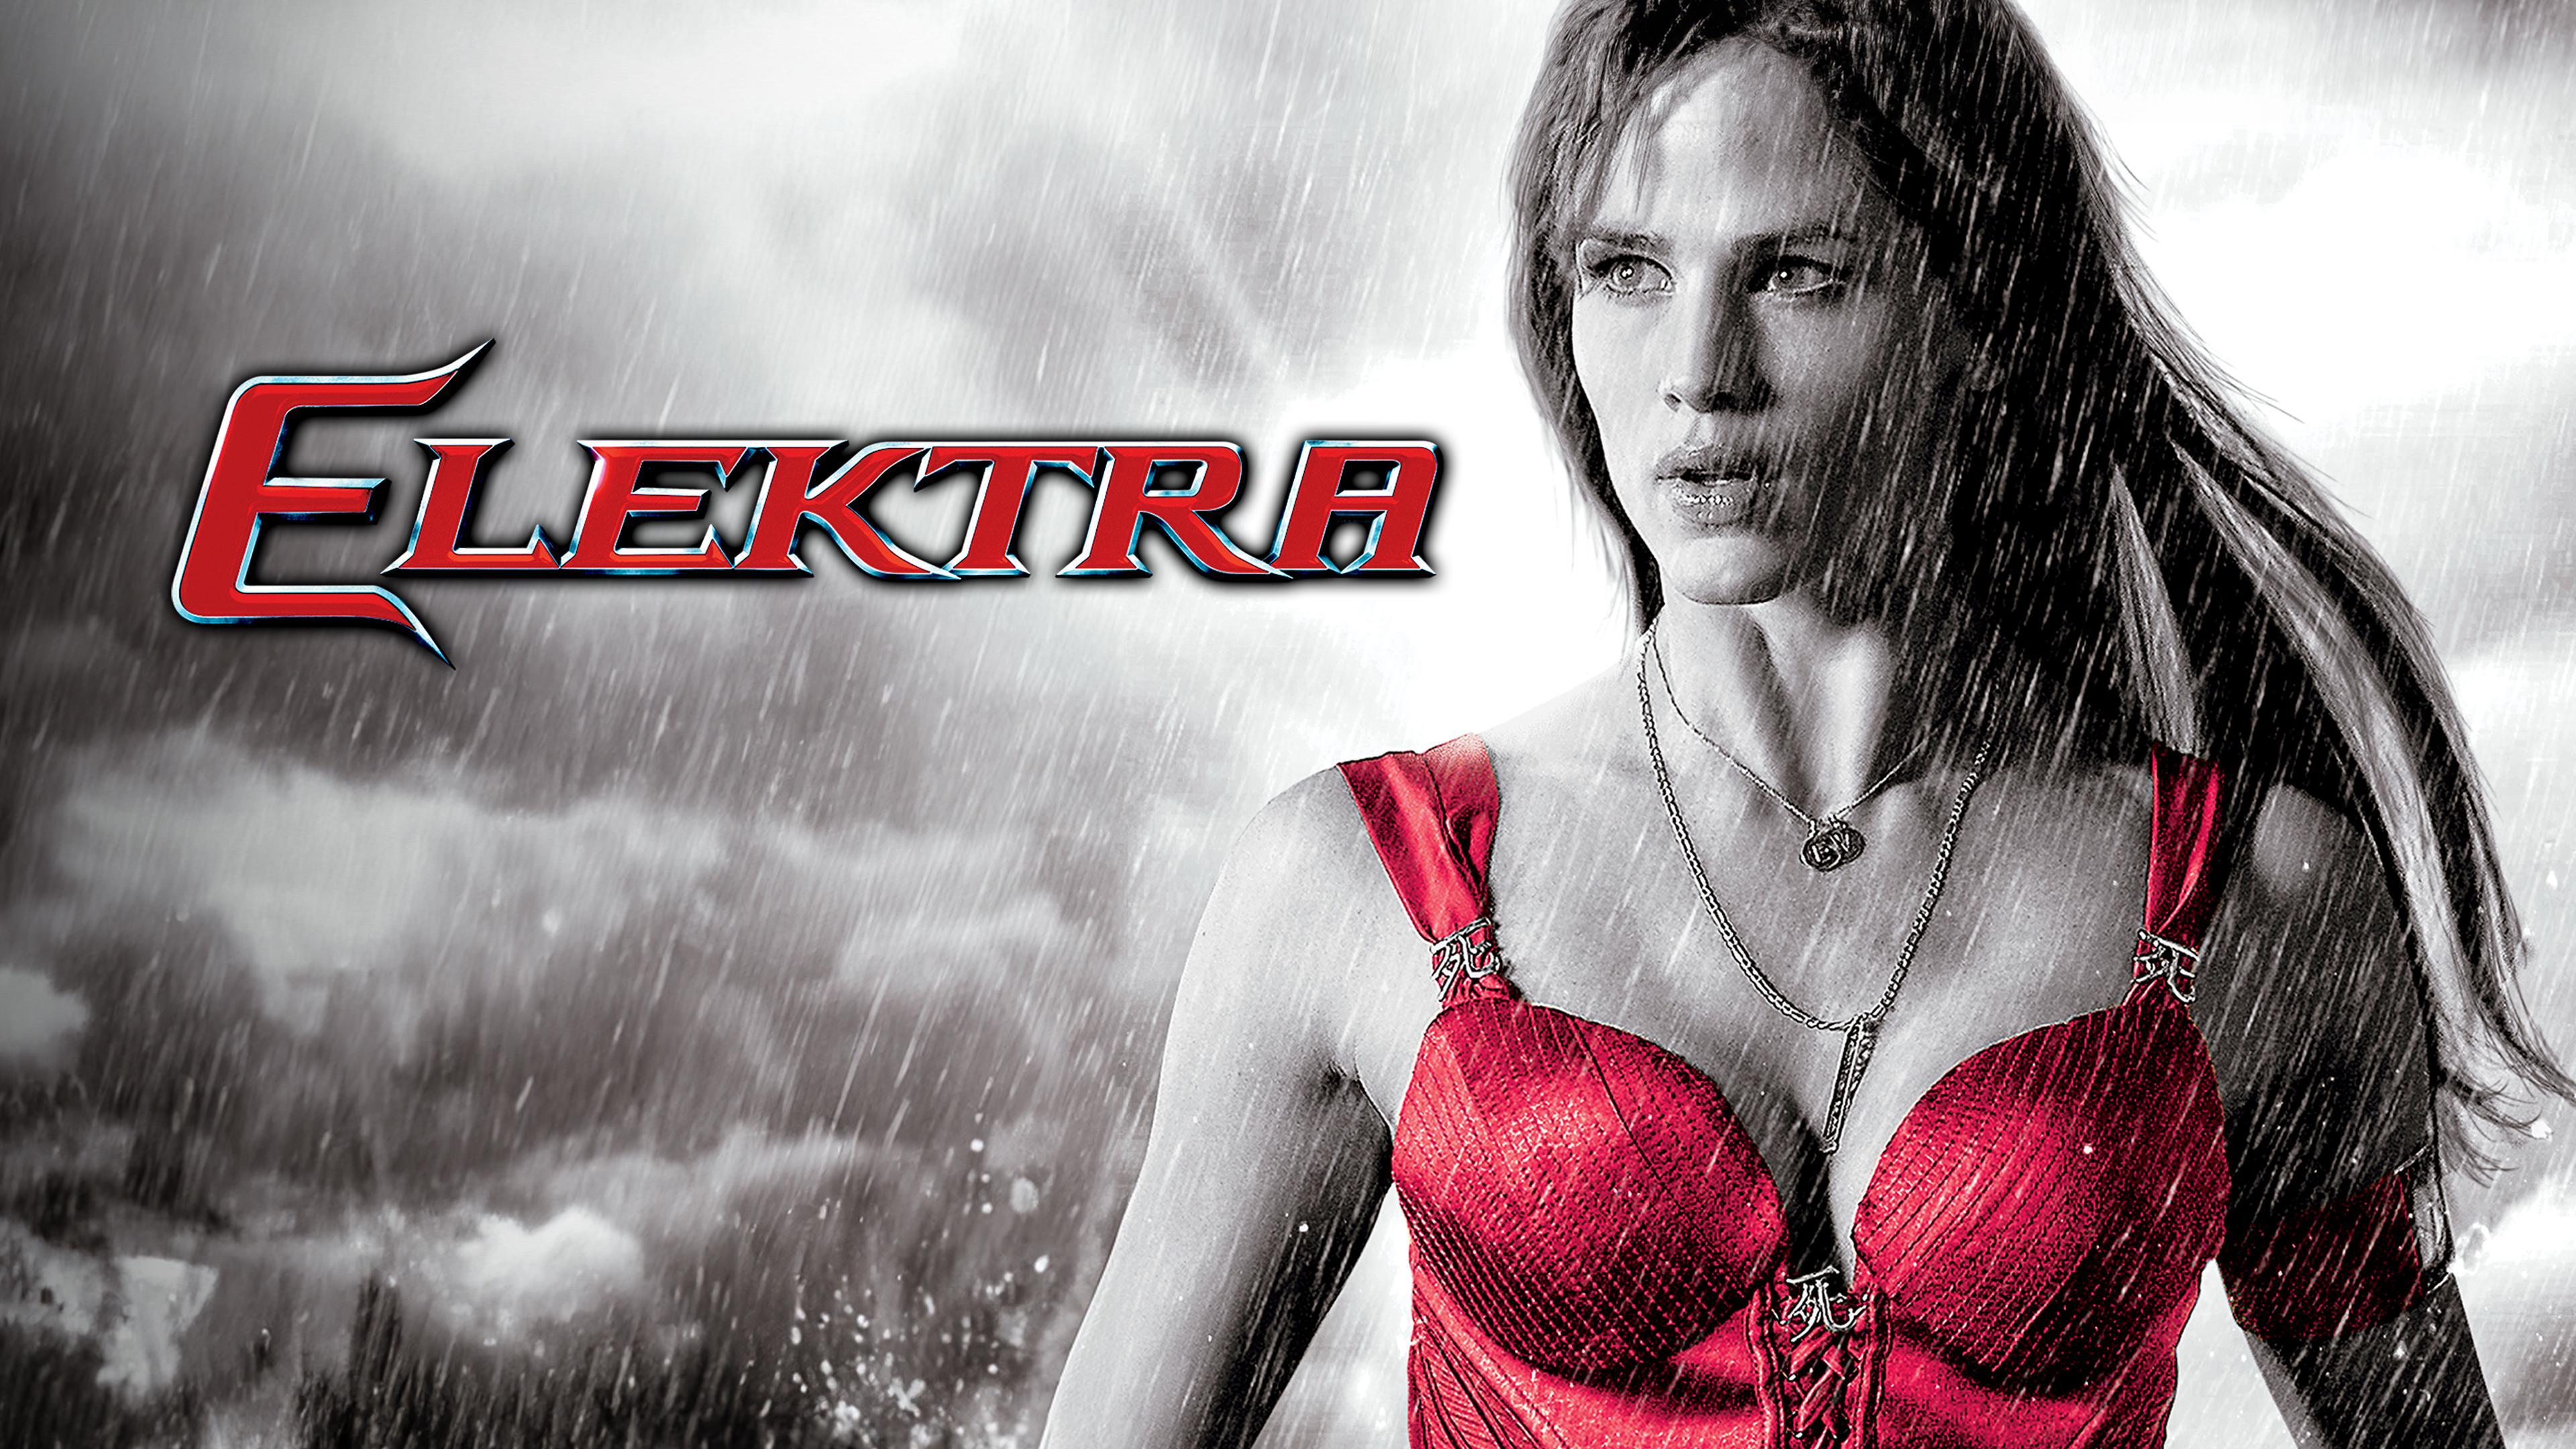 Elektra | Watch the Movie on HBO | HBO.com